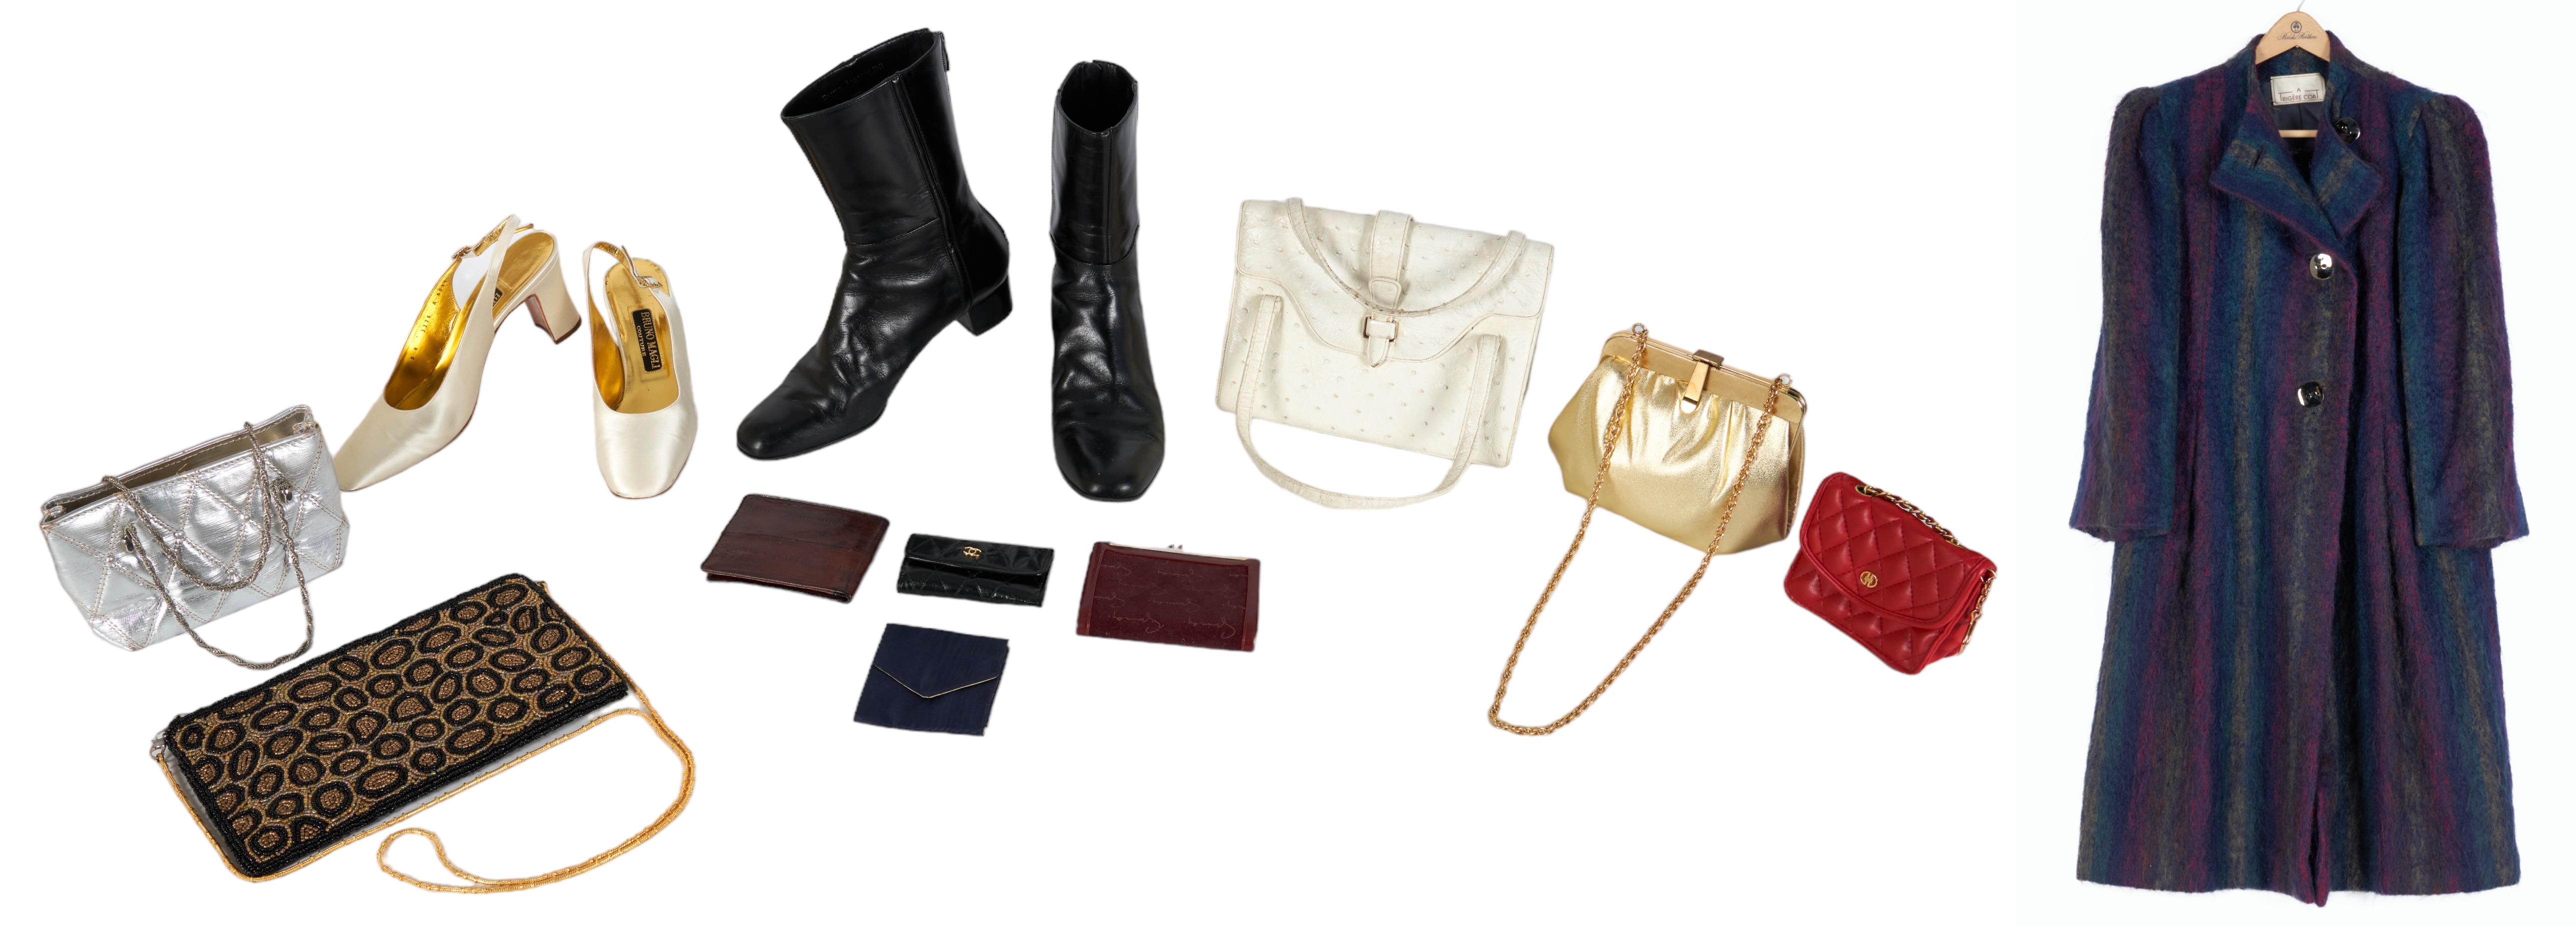 Vintage purses coat and accessories 2e24d6